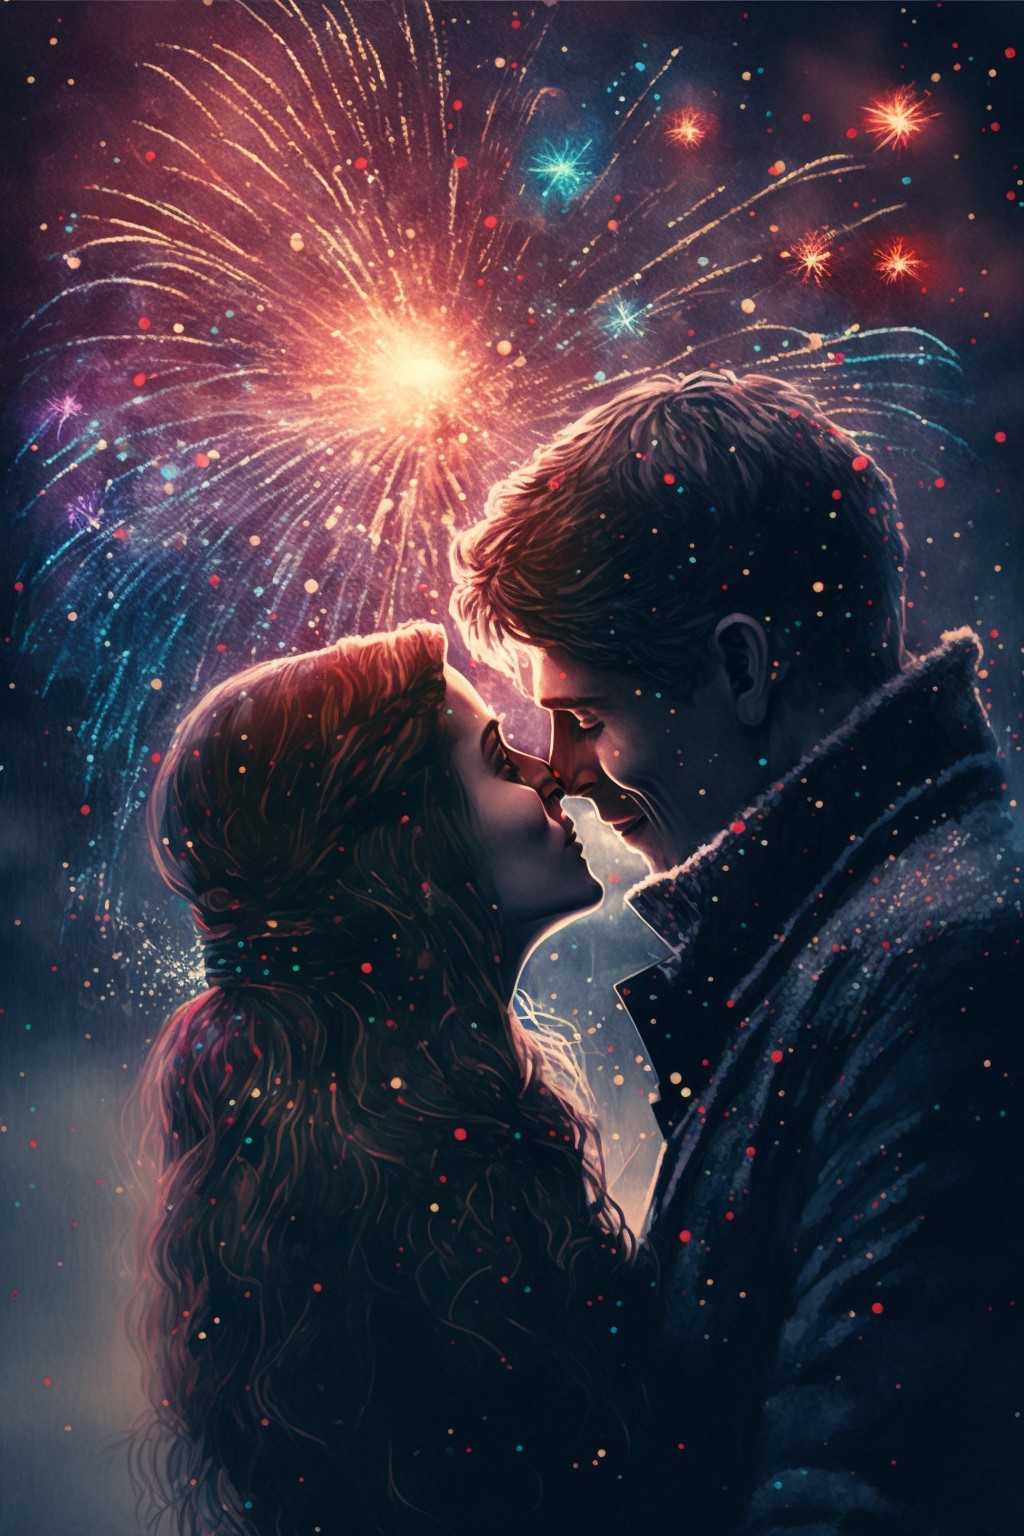 Fireworks of love bloom in the sky